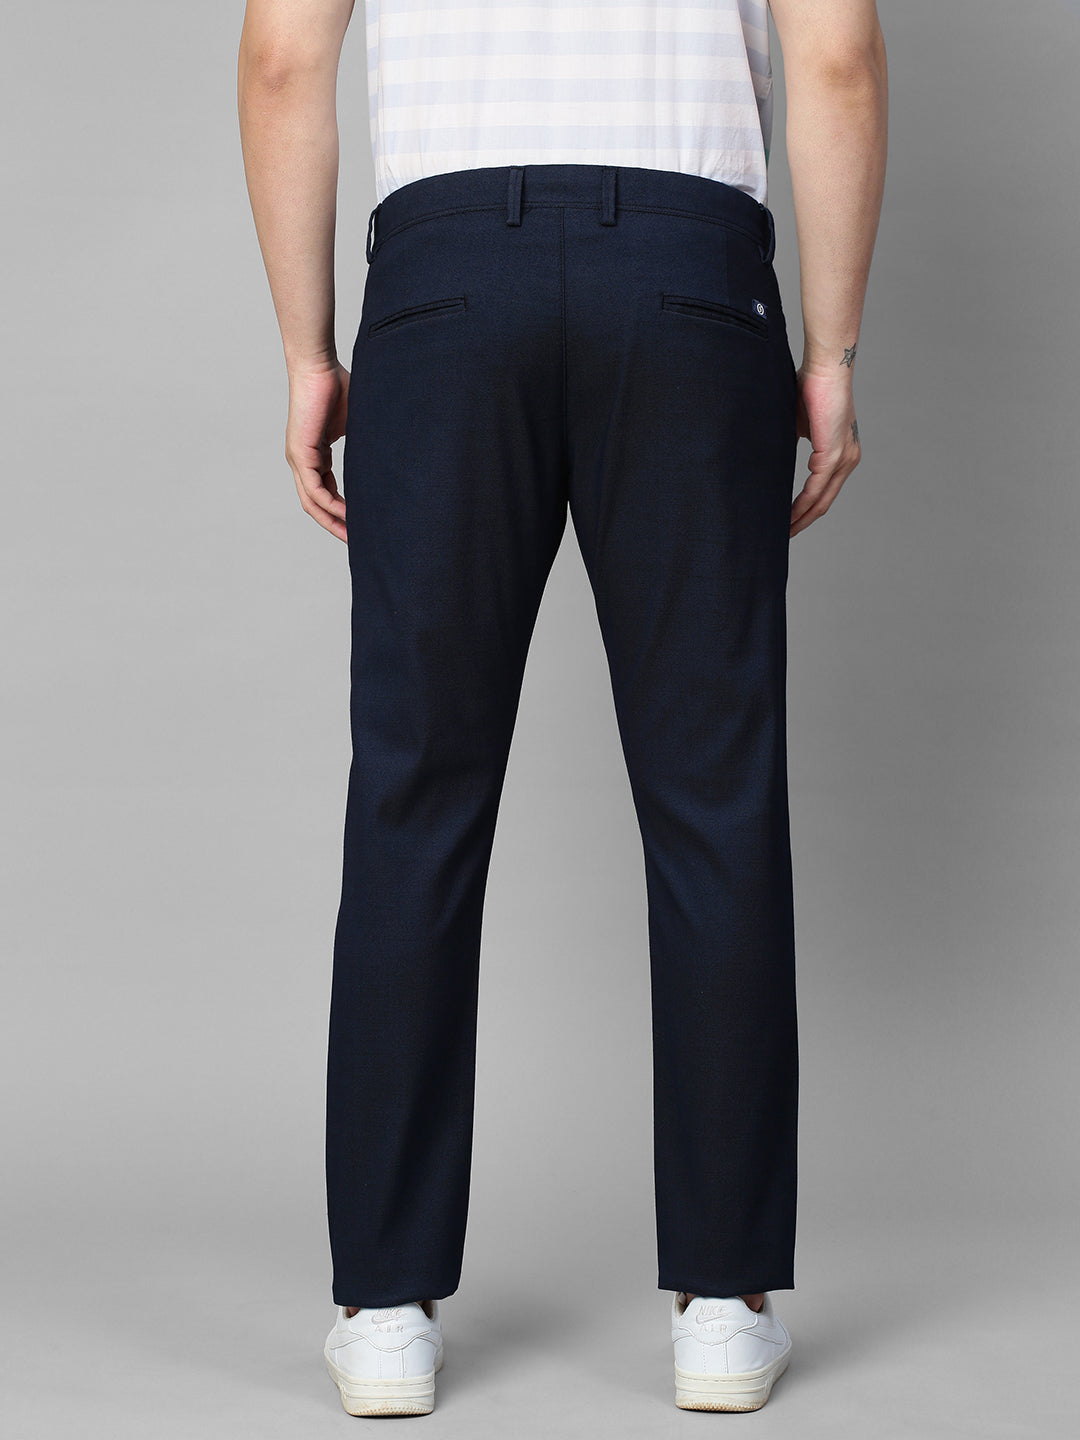 Genips Men's Navy Cotton Stretch Caribbean Slim Fit Self Design Trousers